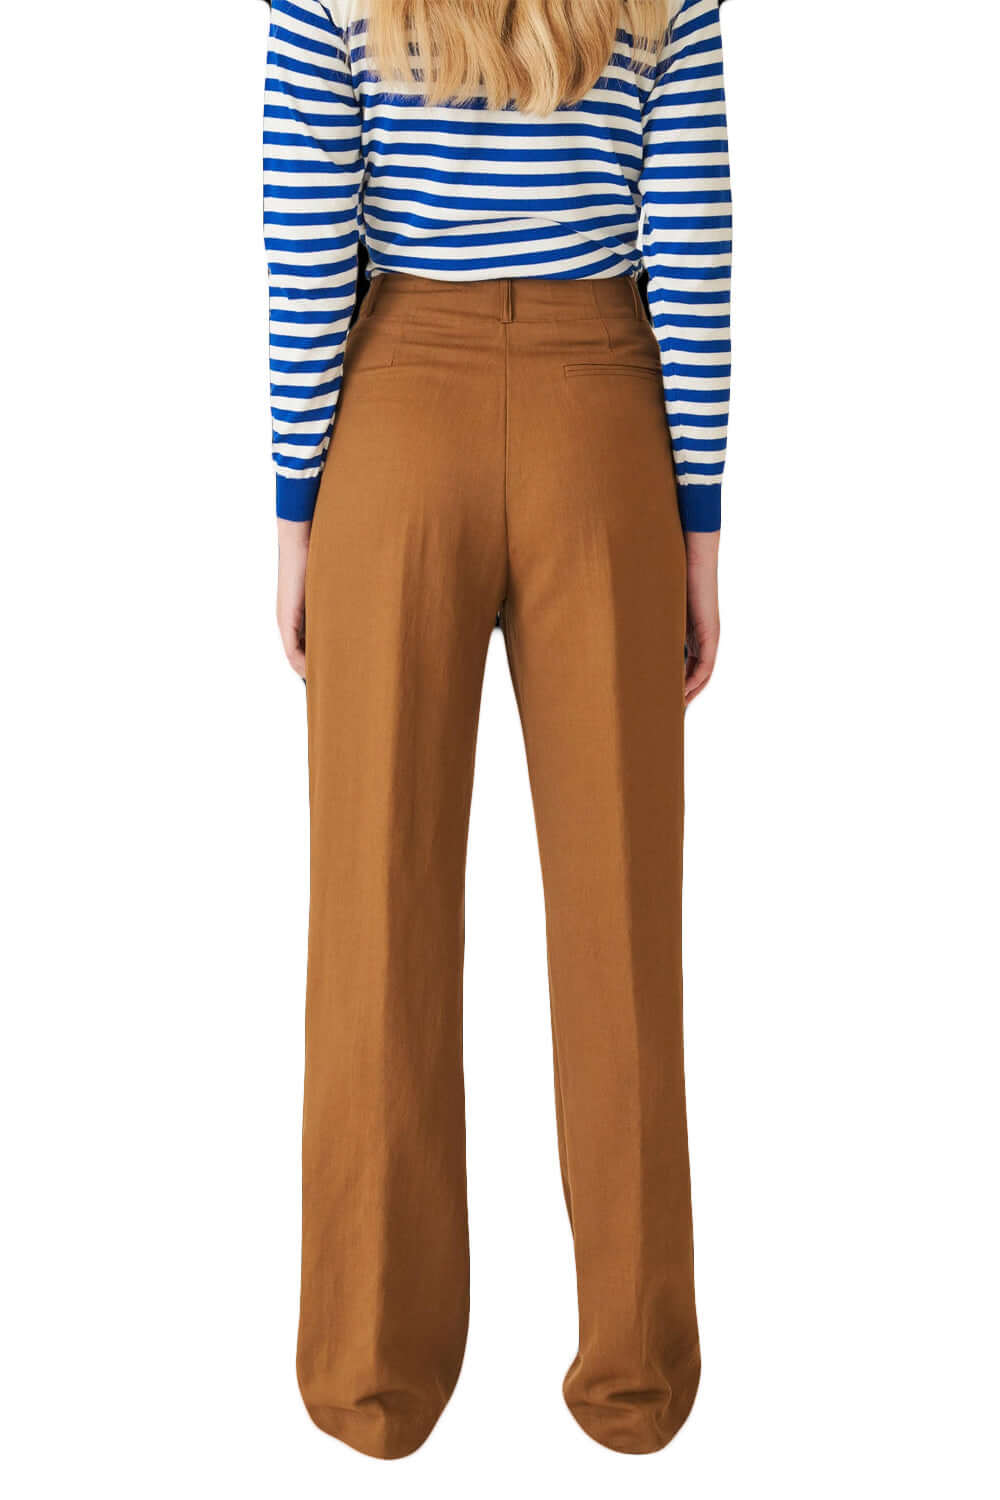 Pantalone in lino e cotone ampio - SUOLI Pantaloni e jeans SUOLI   